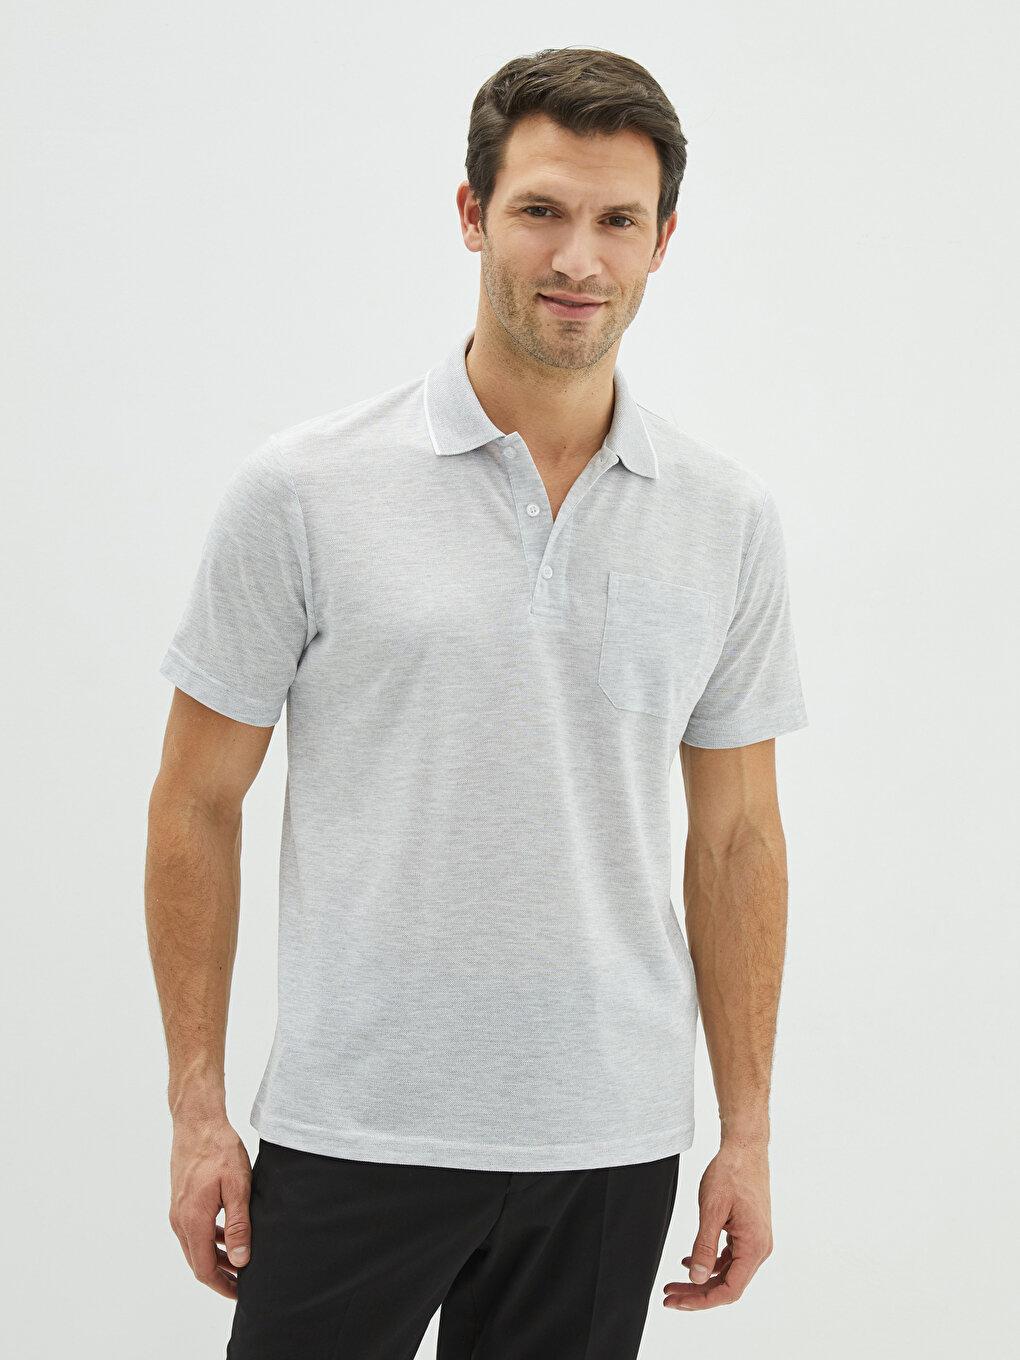 Polo Neck Short Sleeve Men's T-Shirt -S20758Z8-MHN - S20758Z8-MHN - LC ...